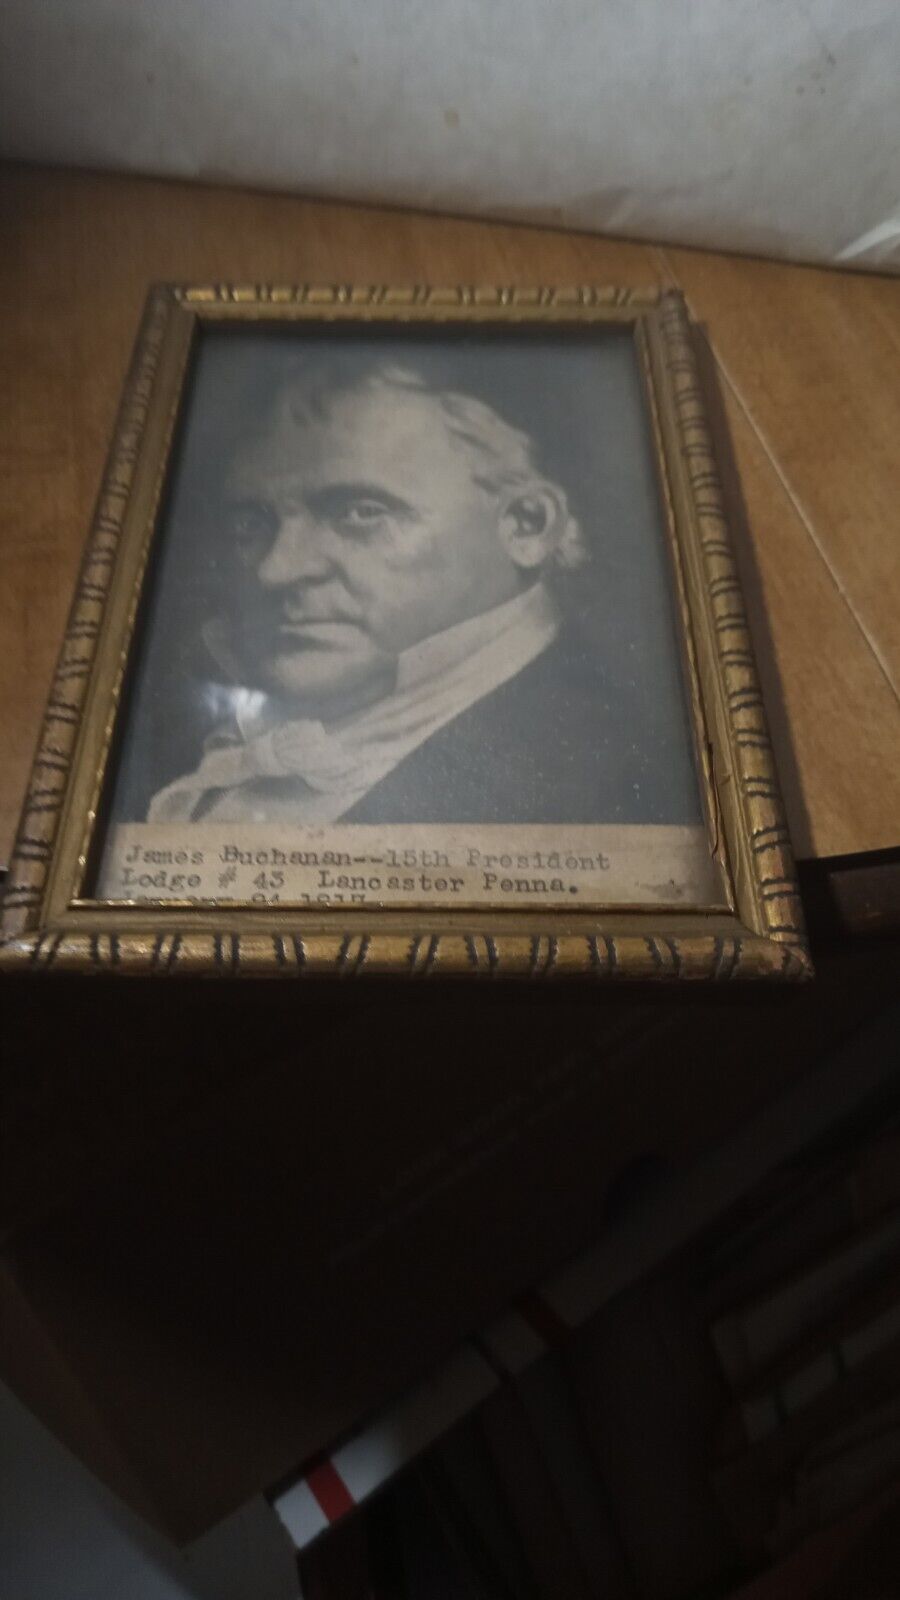 Masonic History Of 15th President James Buchanan Lancaster Lodge #43